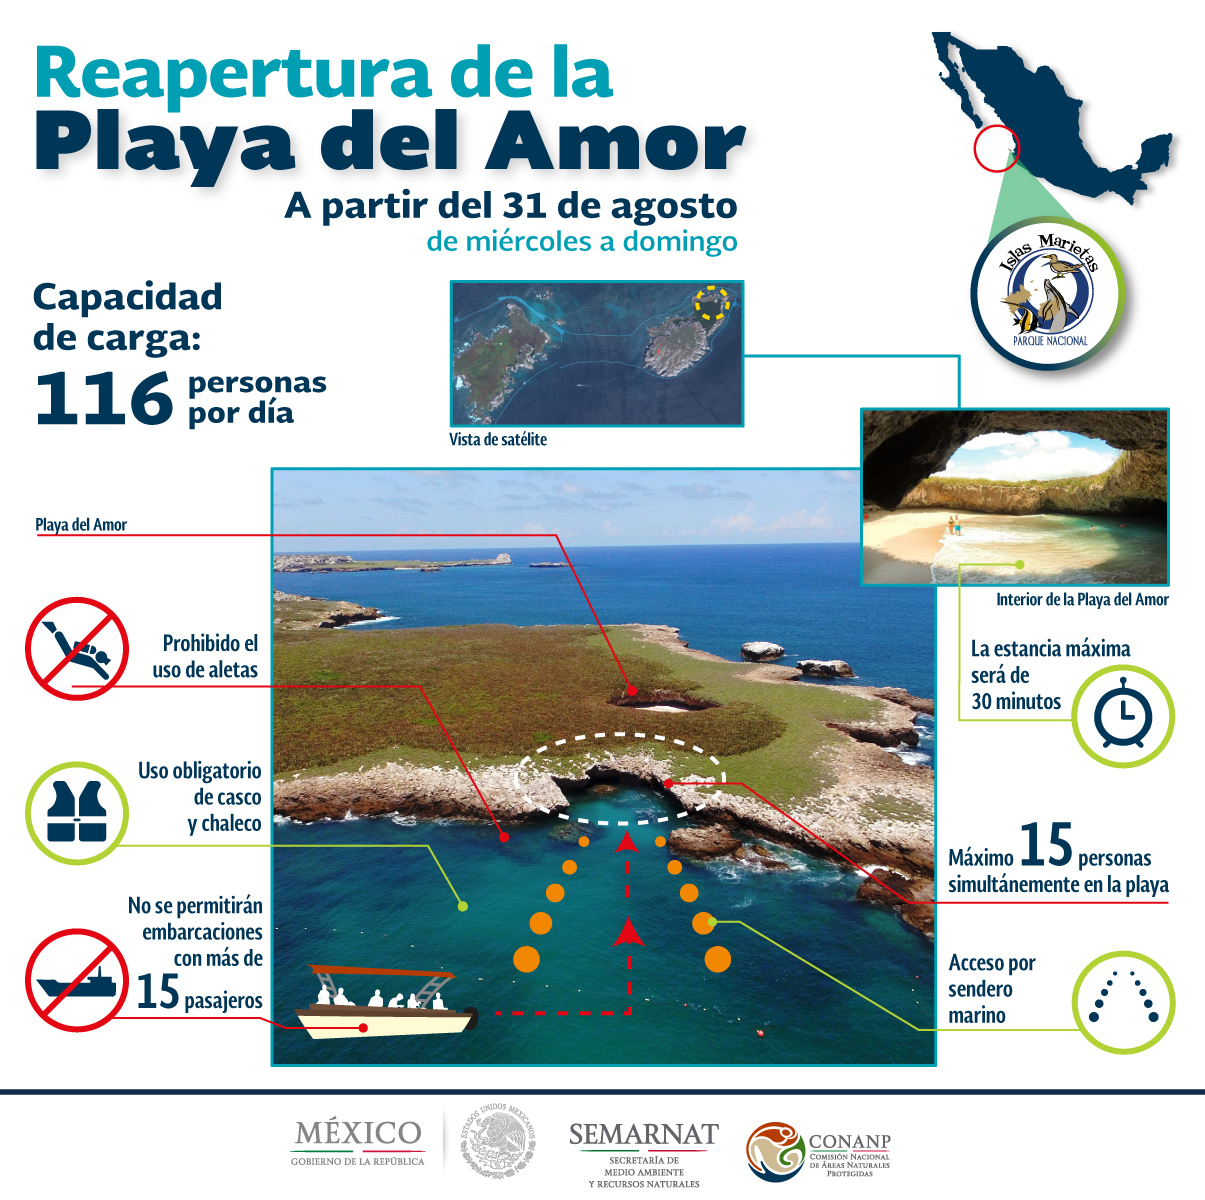 /cms/uploads/image/file/188821/Infografia-Apertura-Playa-del-Amor.jpg